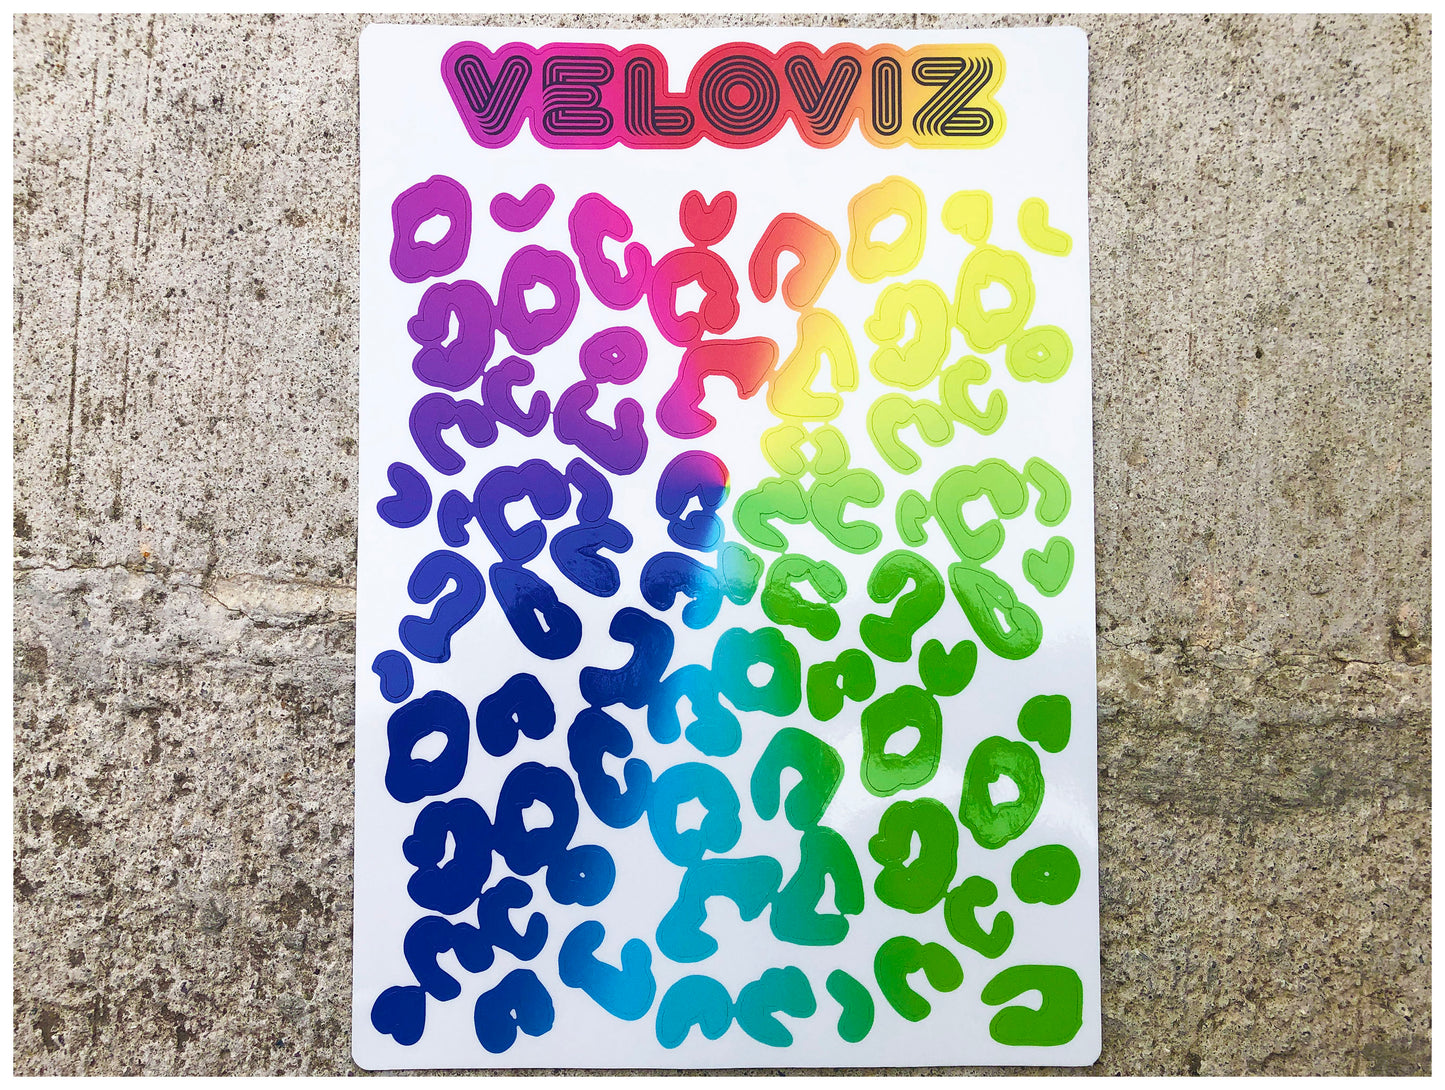 Reflective Leopard Print A4 Cargo Bike Stickers - Neon Fade